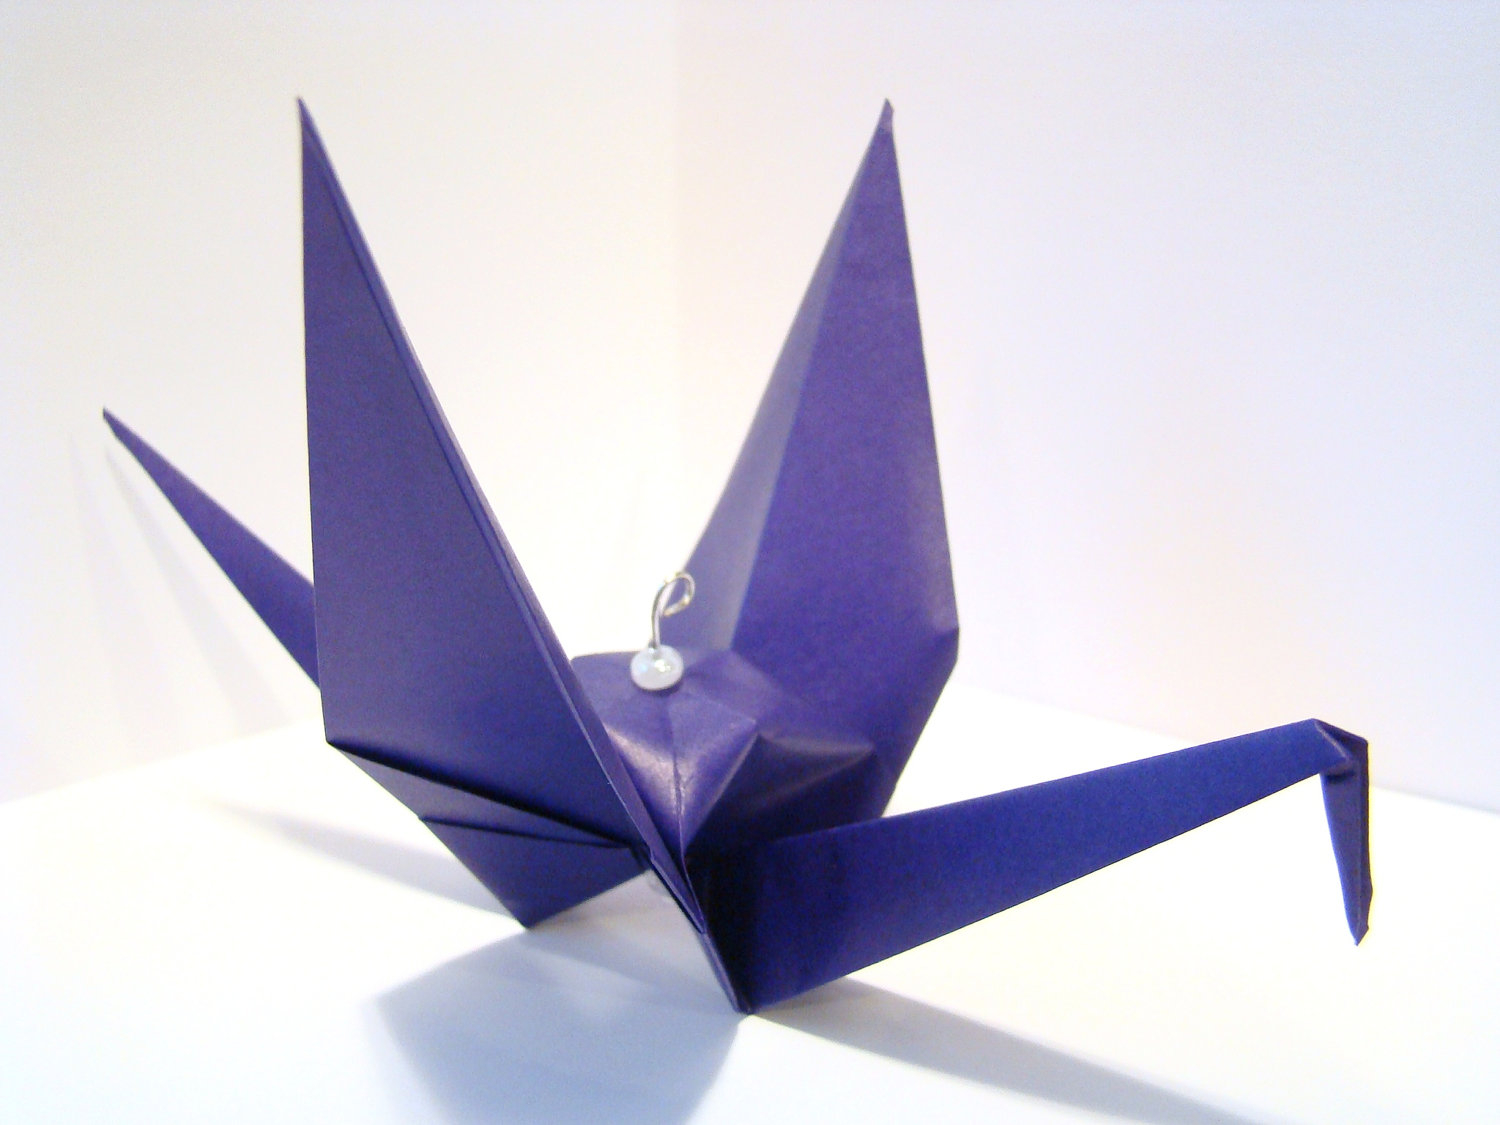 Solid Colored Origami Paper Origami Crane Ornament Solid Color Crane From Origami Delights